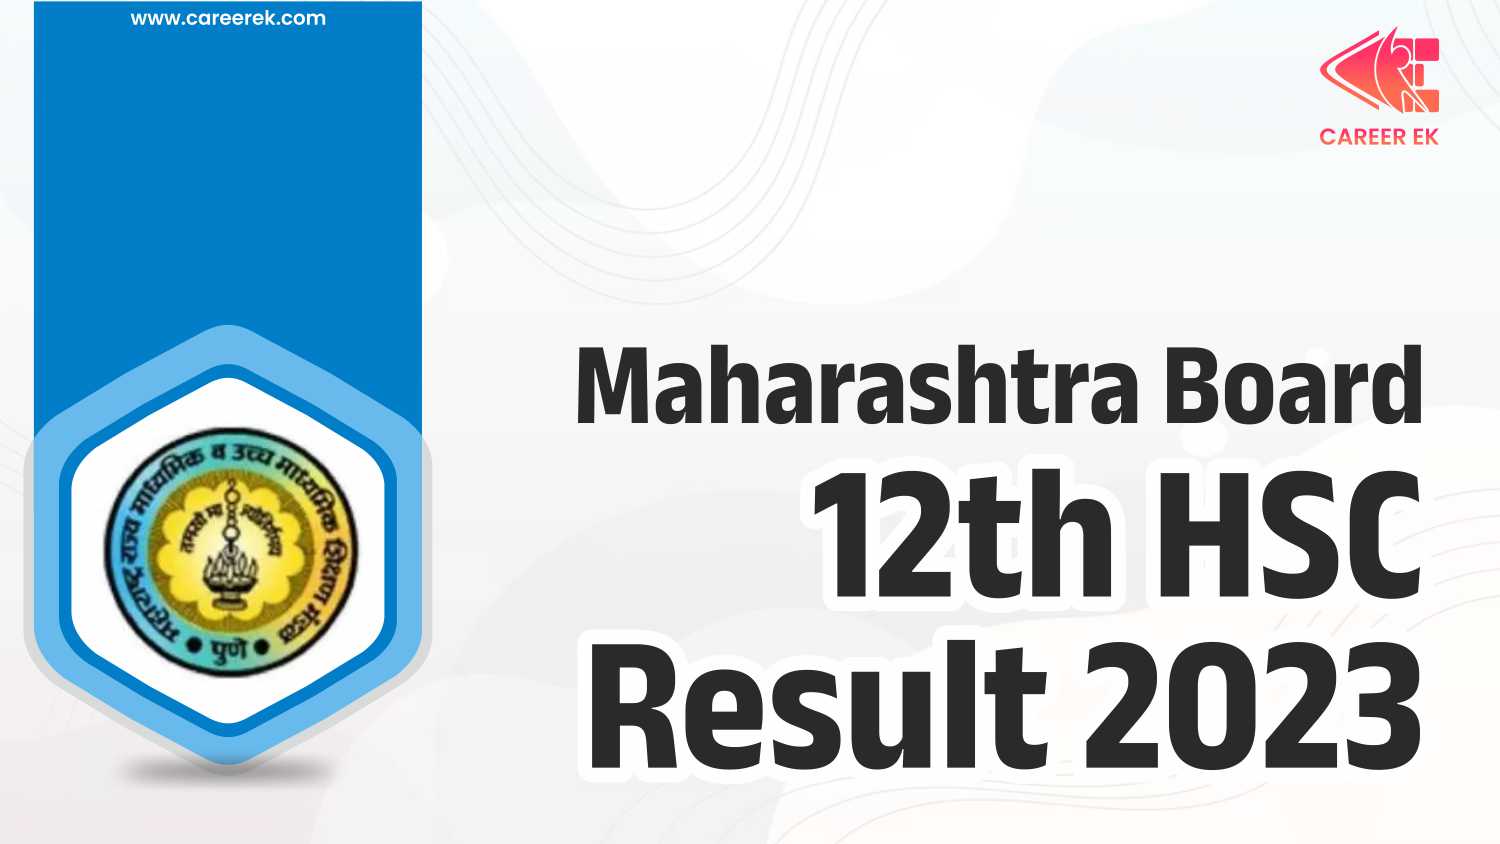 12th Hsc Result 2023 Maharashtra Board Date Careerek 8540